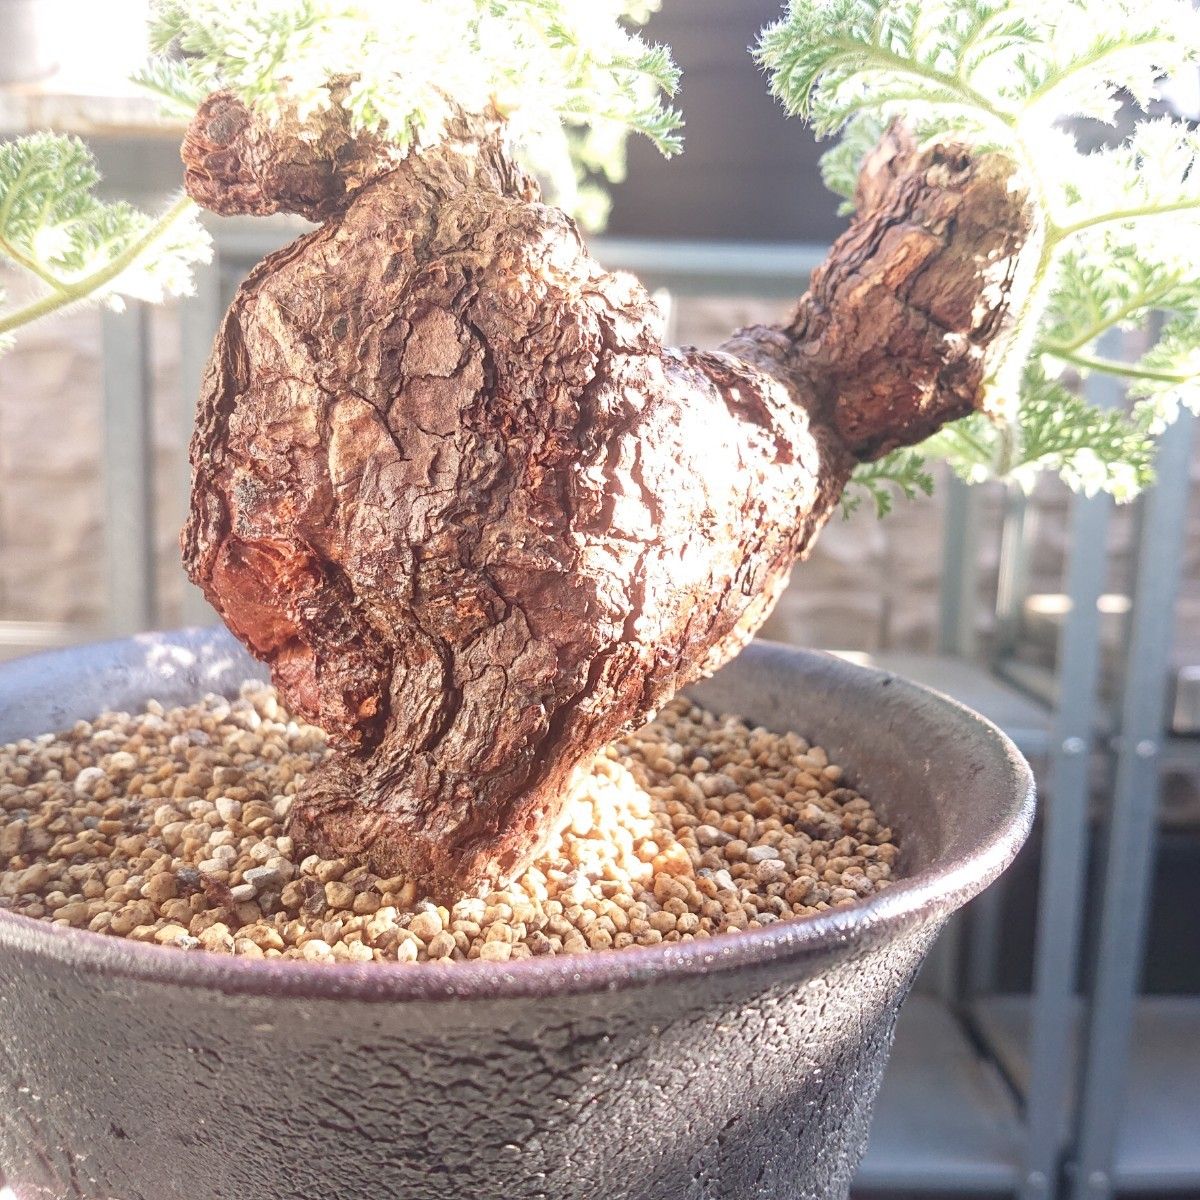 Pelargonium triste ペラルゴニウム トリステ  鉢付